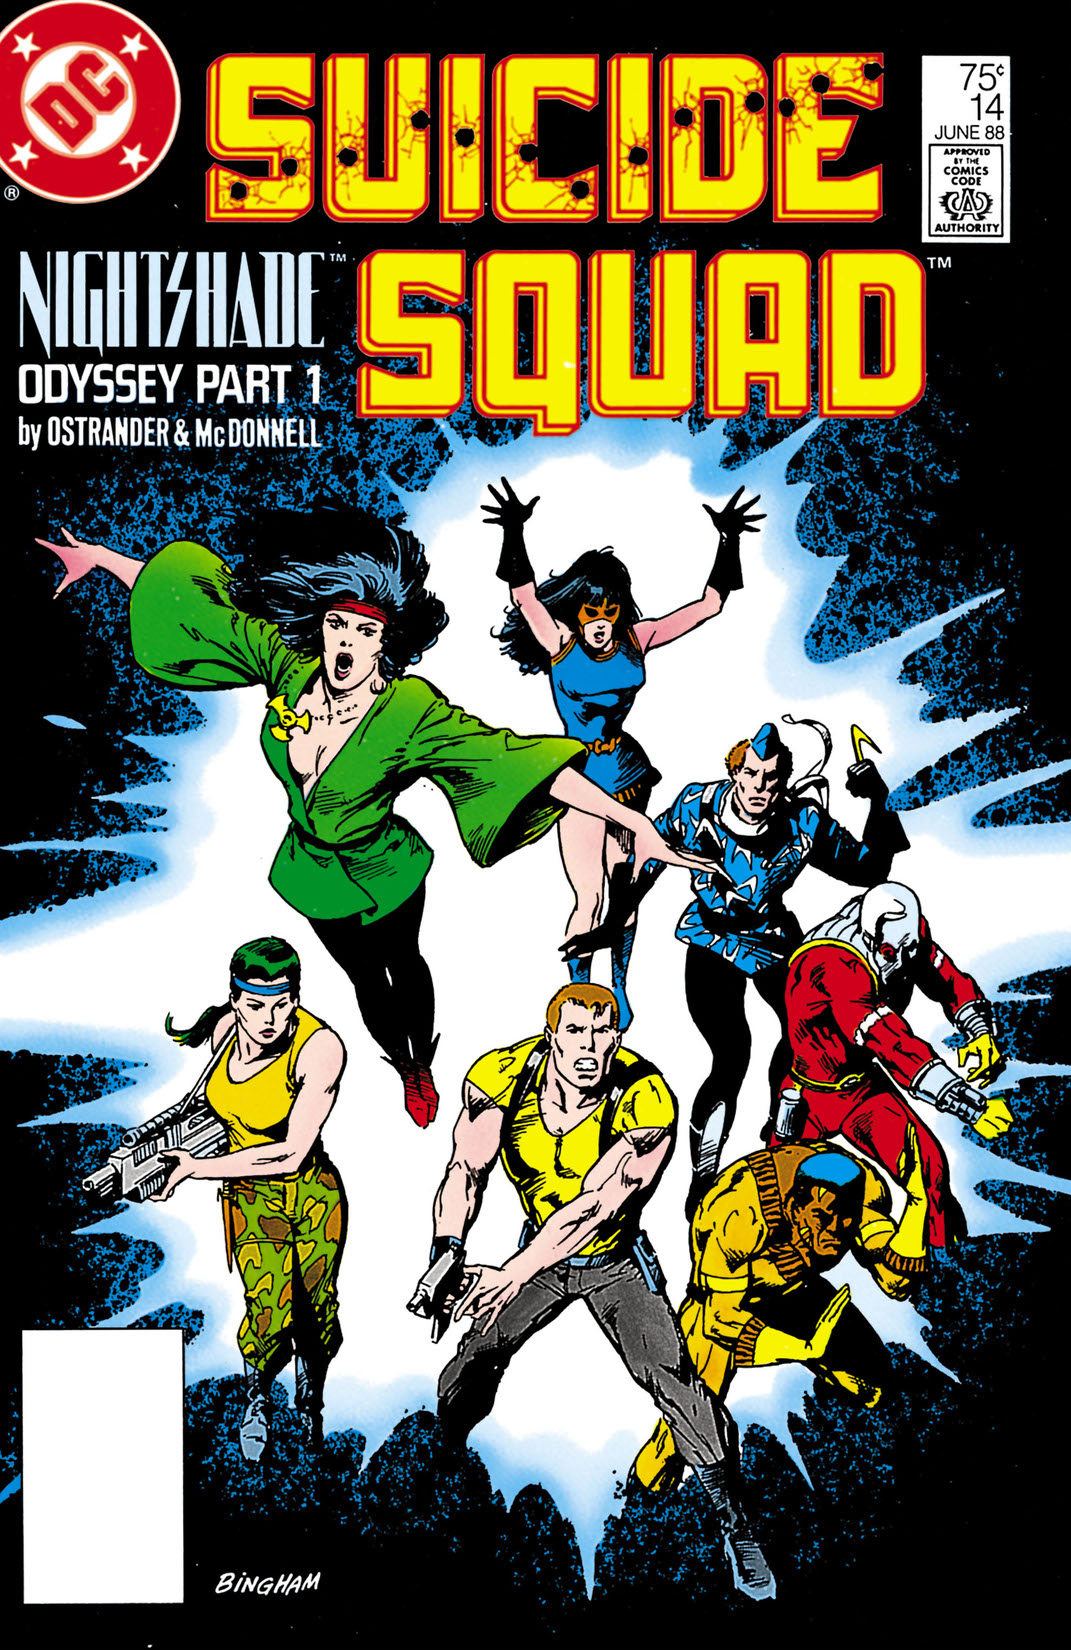 Suicide Squad (1987-) #14 preview images